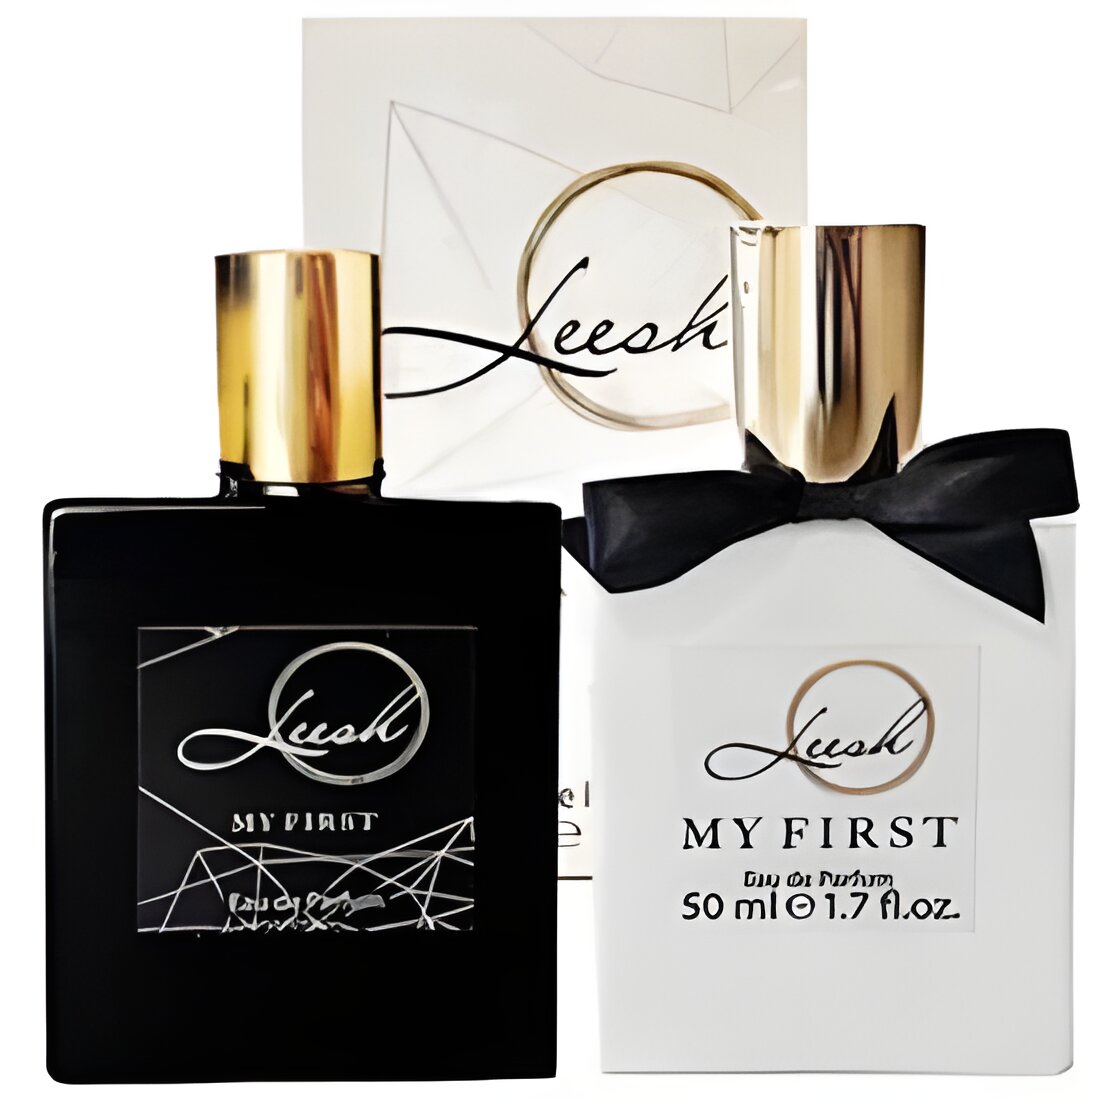 Free Leesh My First Fragrances